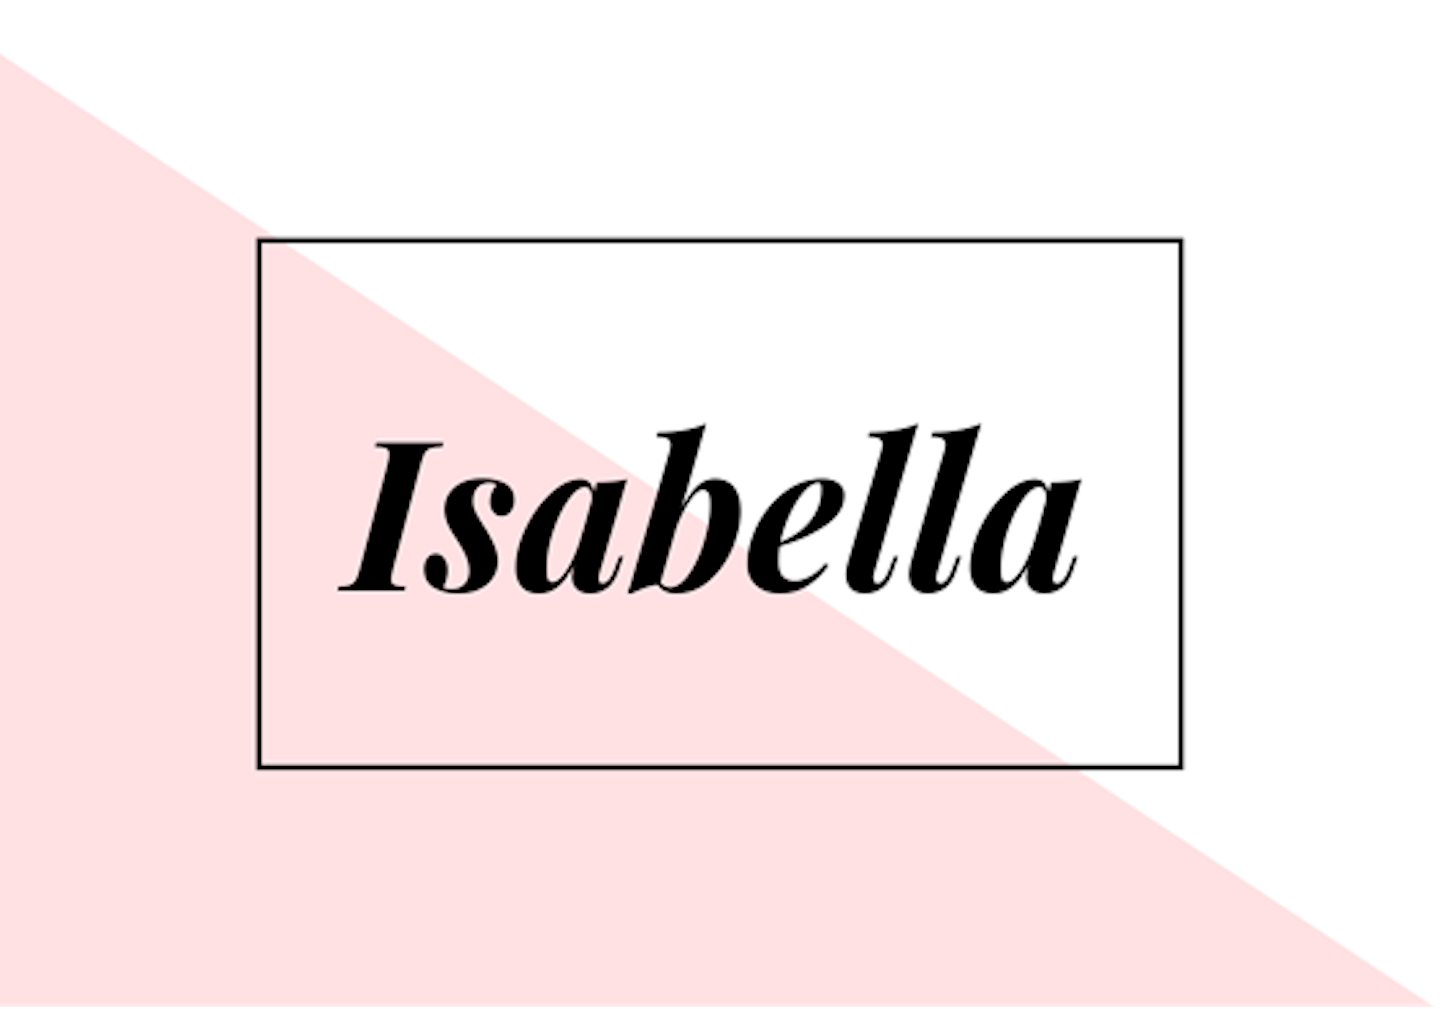 16) Isabella